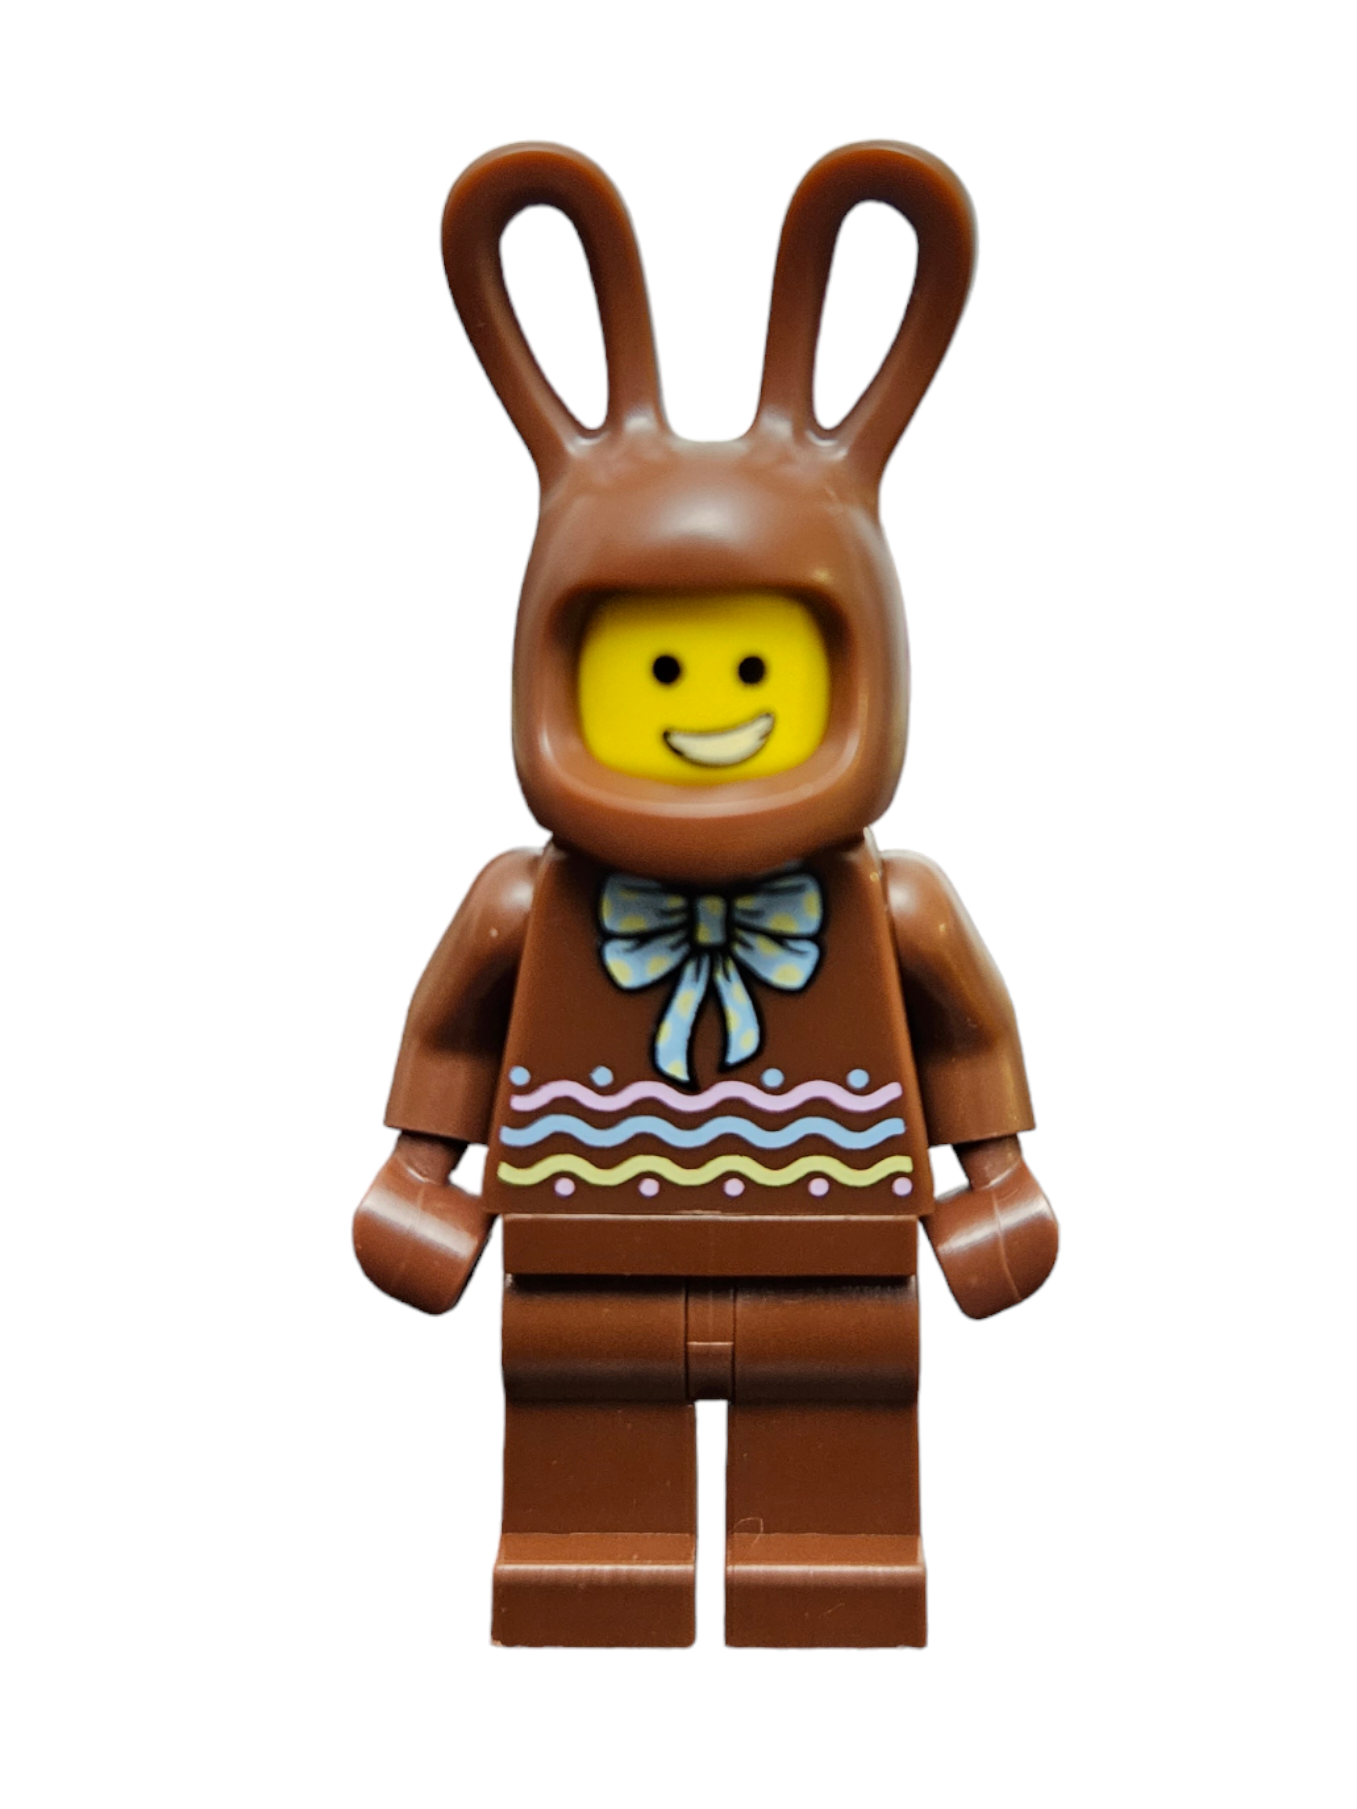 Chocolate easter bunny costume Lego minifigure Media 1 of 1